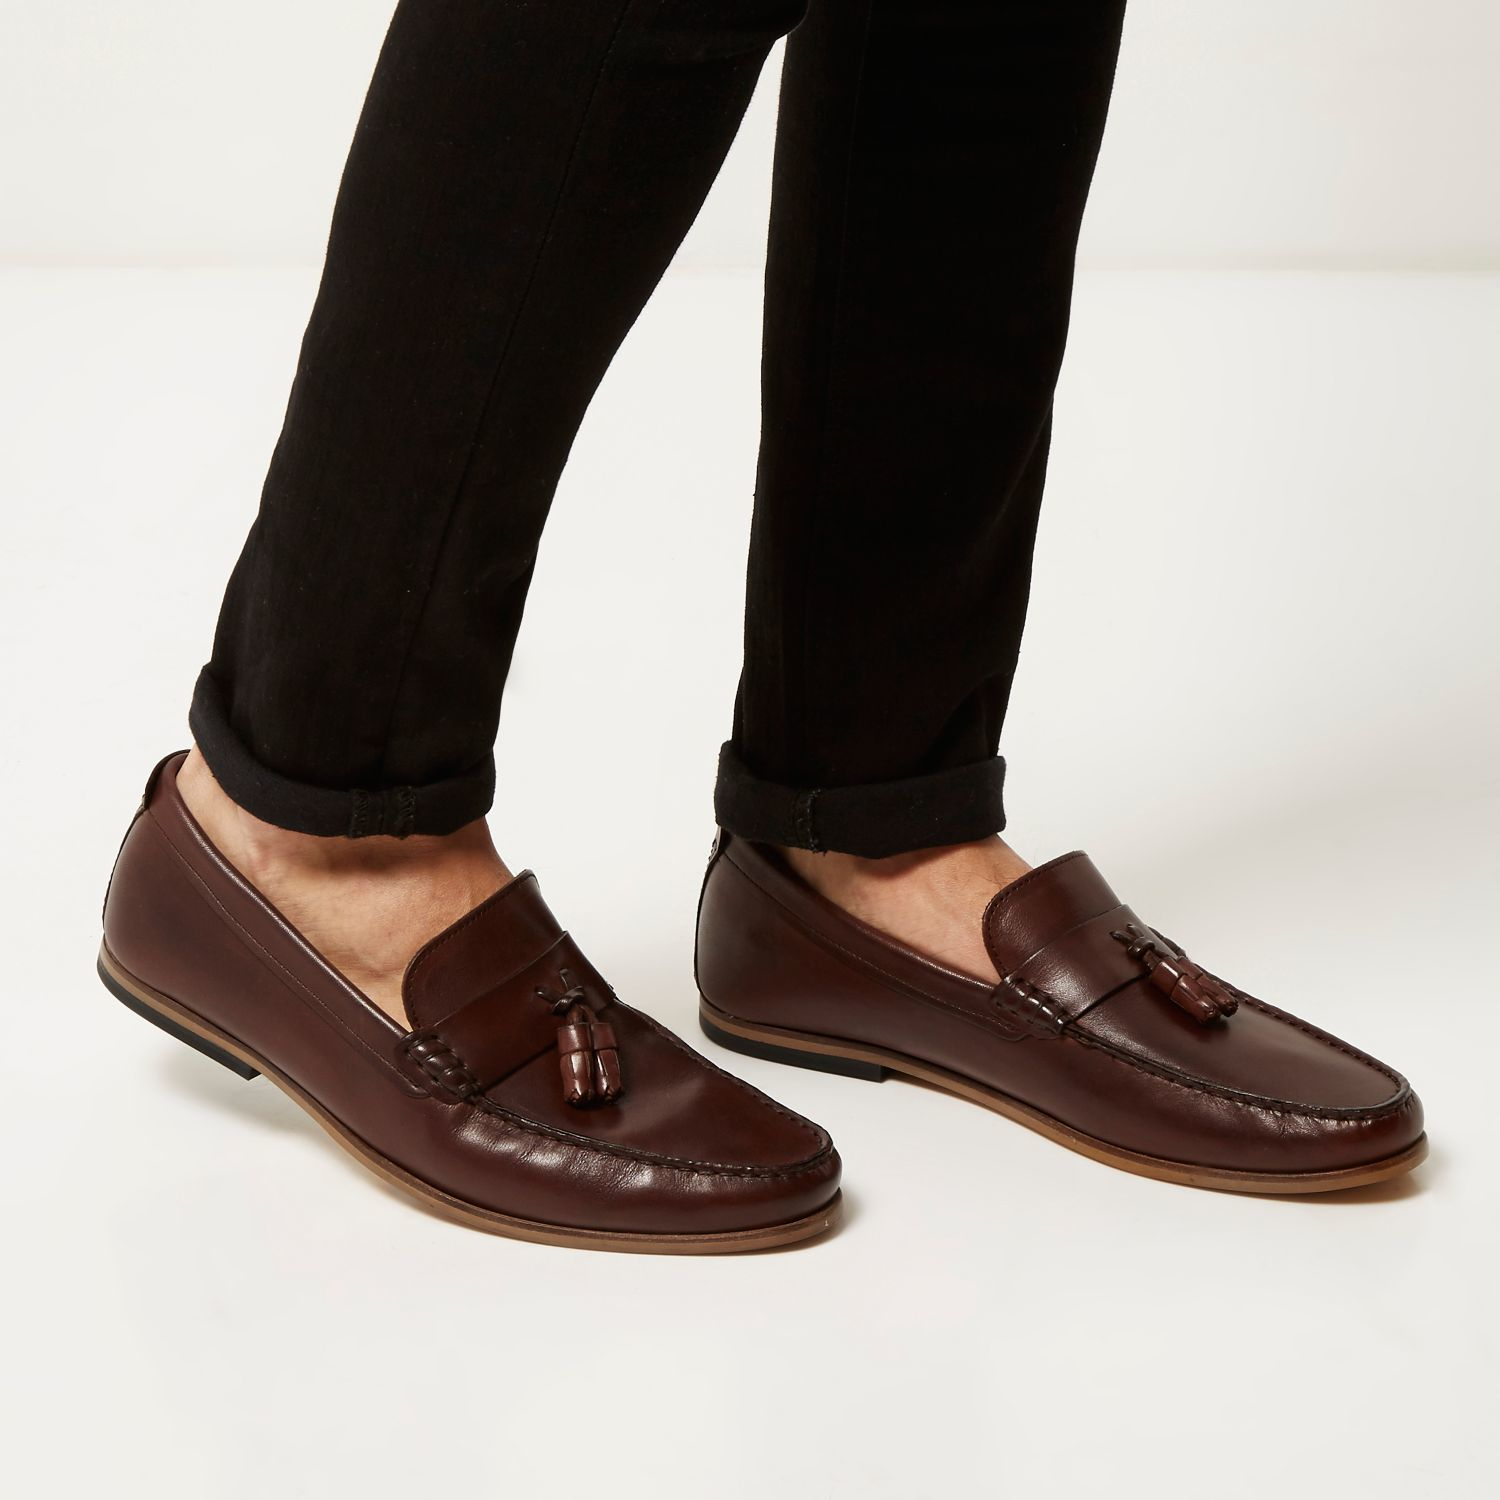 River Island Dark Brown Leather Tassel Loafers for Men - Lyst